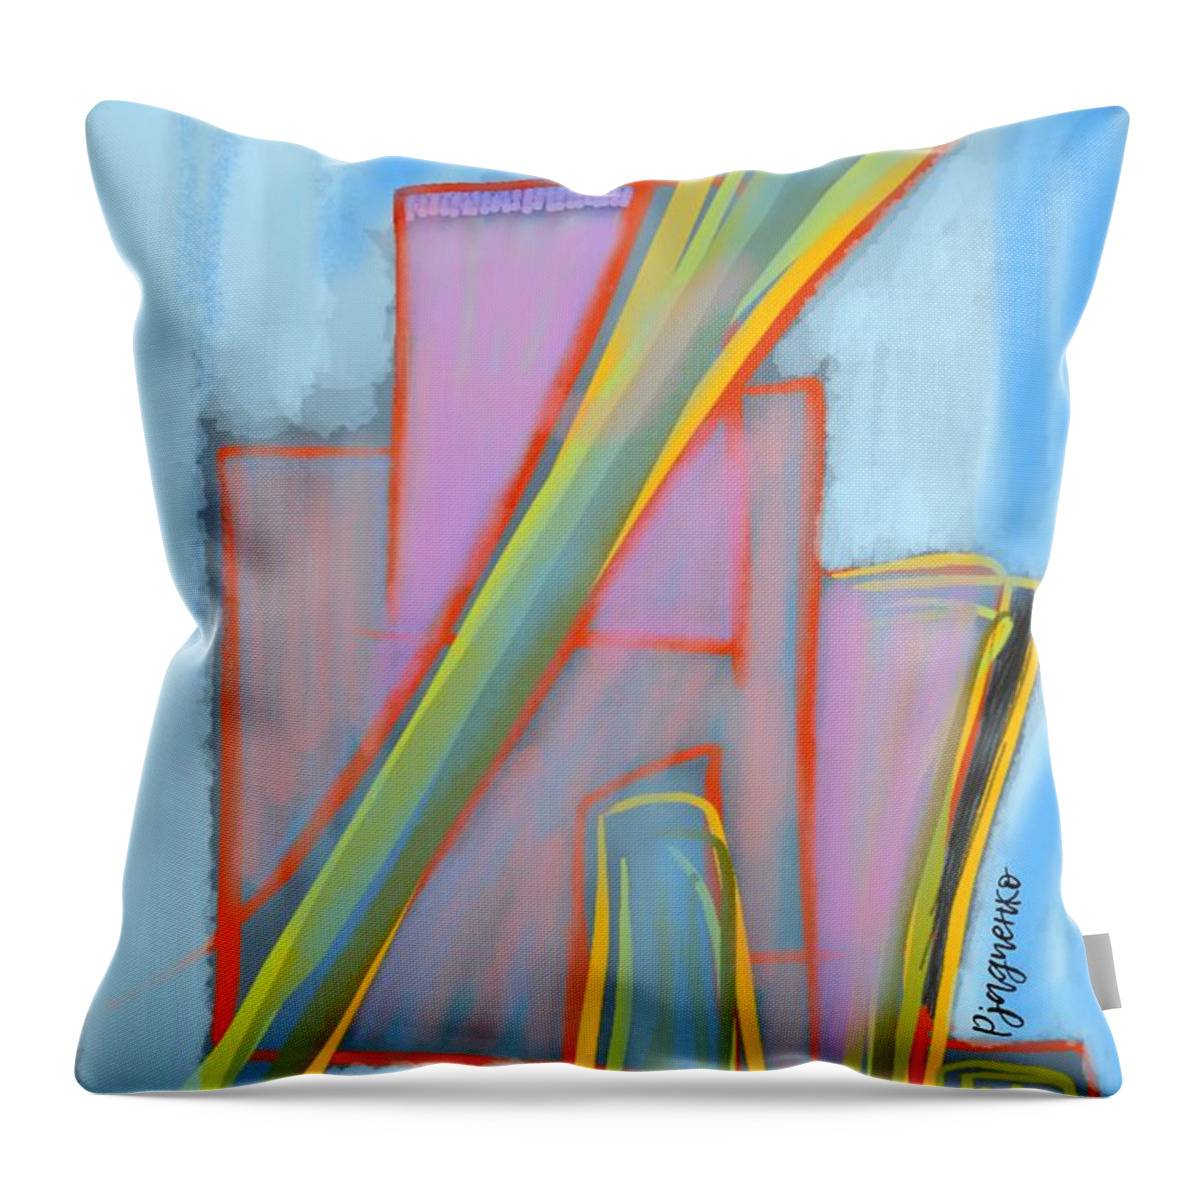 Light Blue Throw Pillow featuring the digital art Abstract #3 by Ljev Rjadcenko